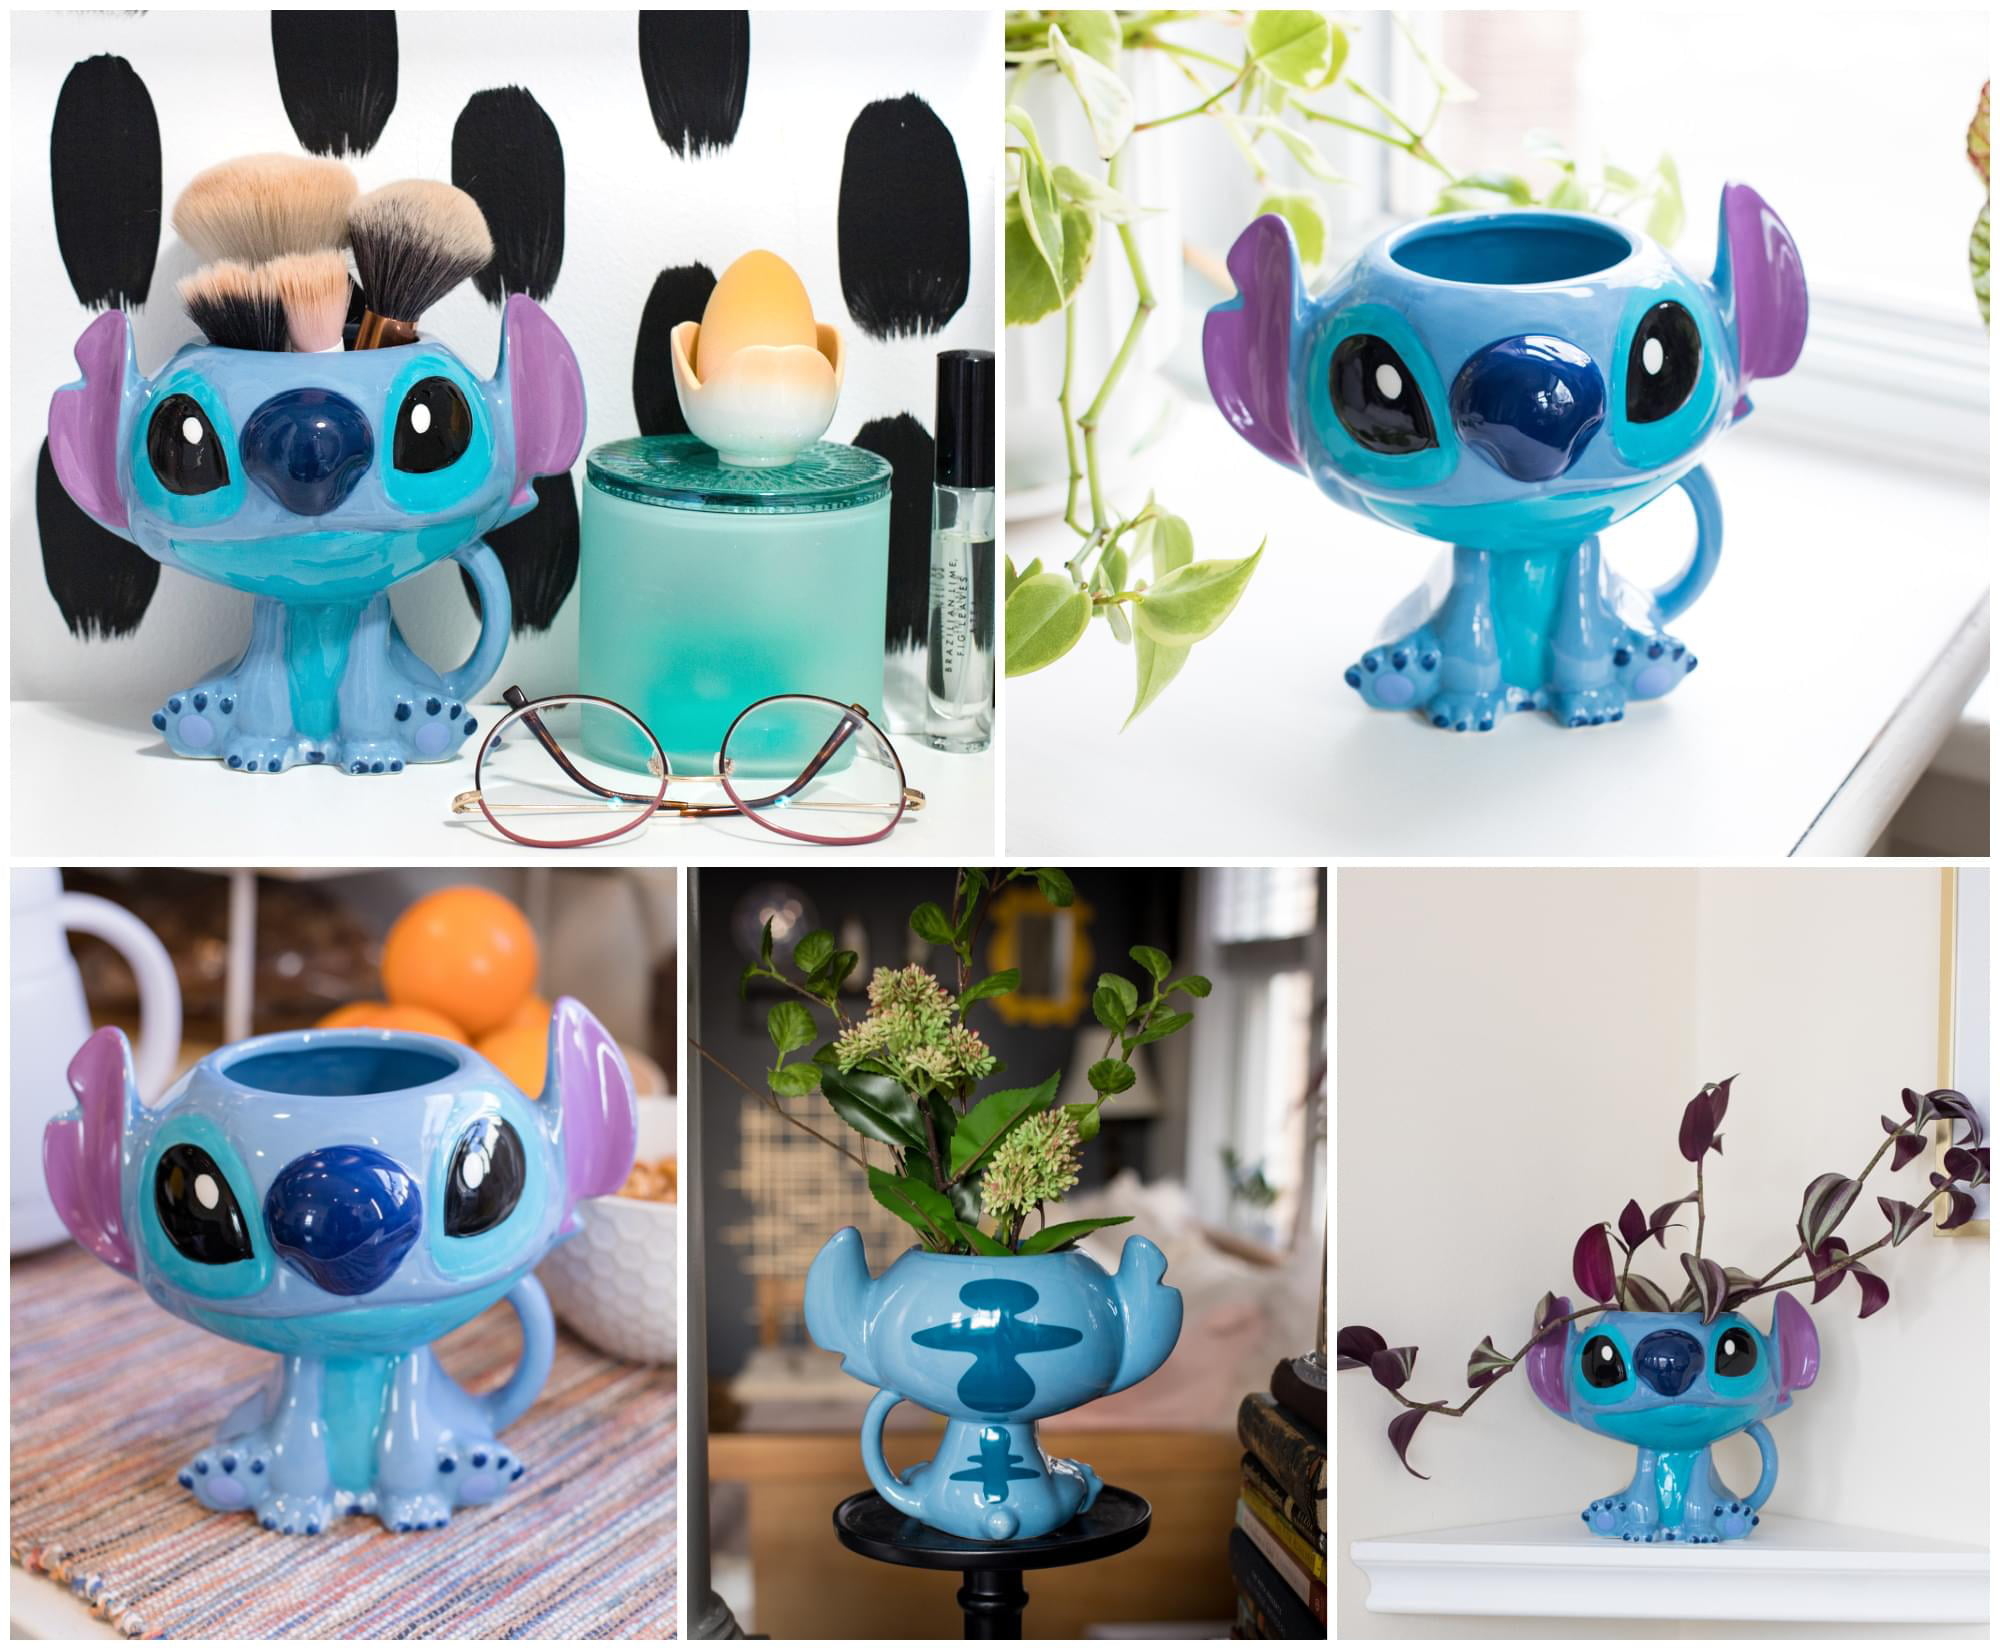 Disney - Lilo & Stitch Mug  Funko Universe, Planet of comics, games and  collecting.